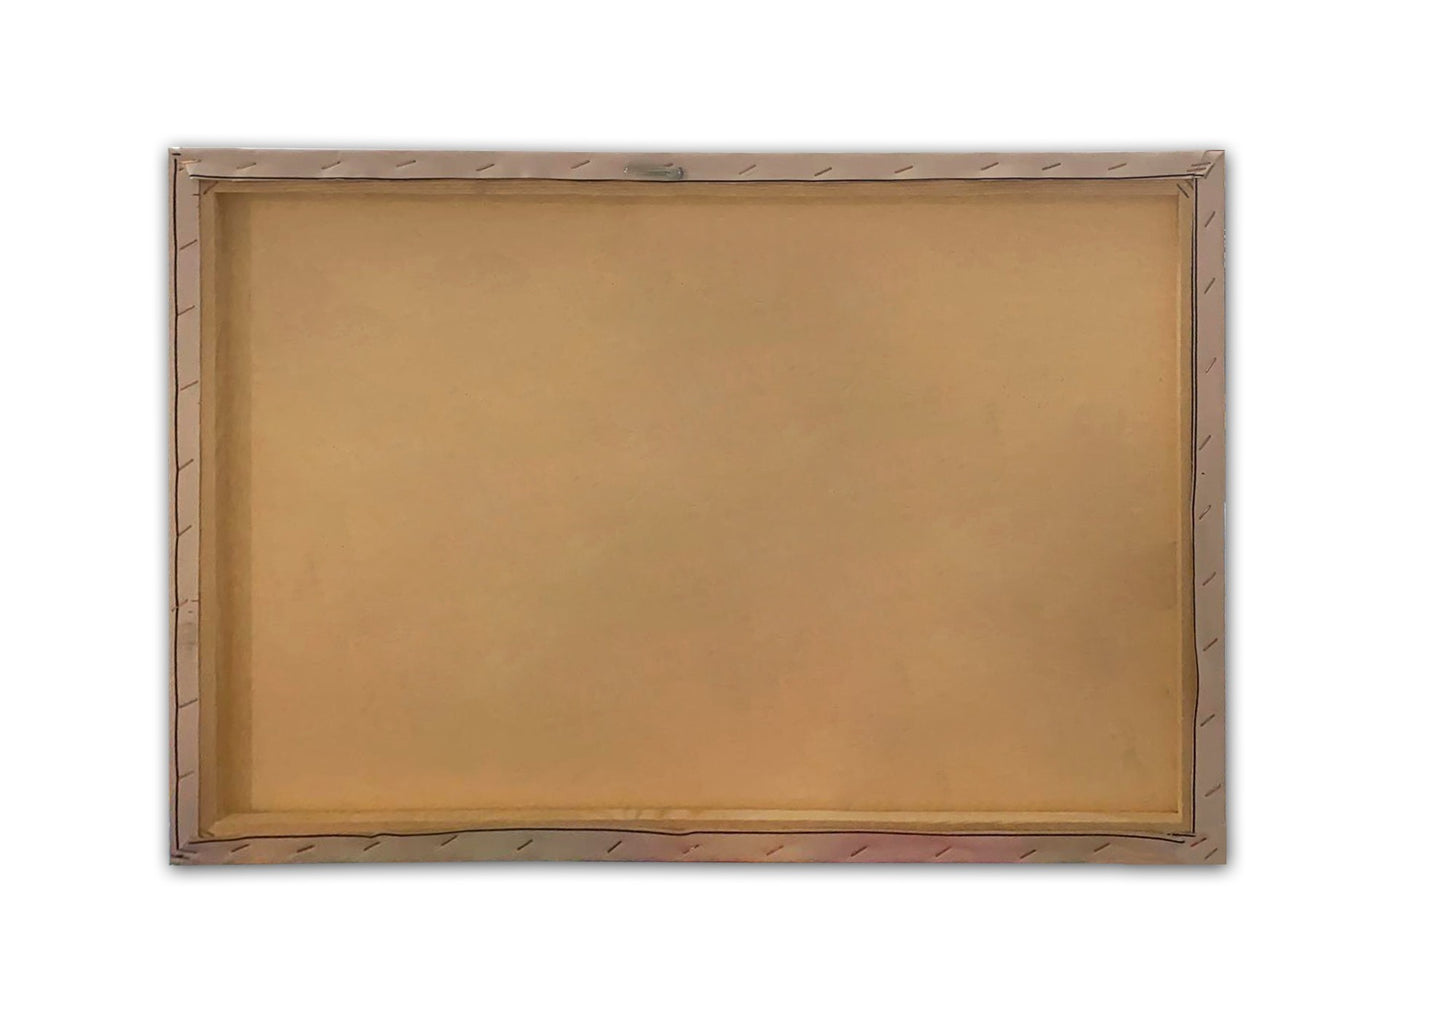 TAKK Kanvas Tablo (70 x 100) - 196 - NordlyHome.dk